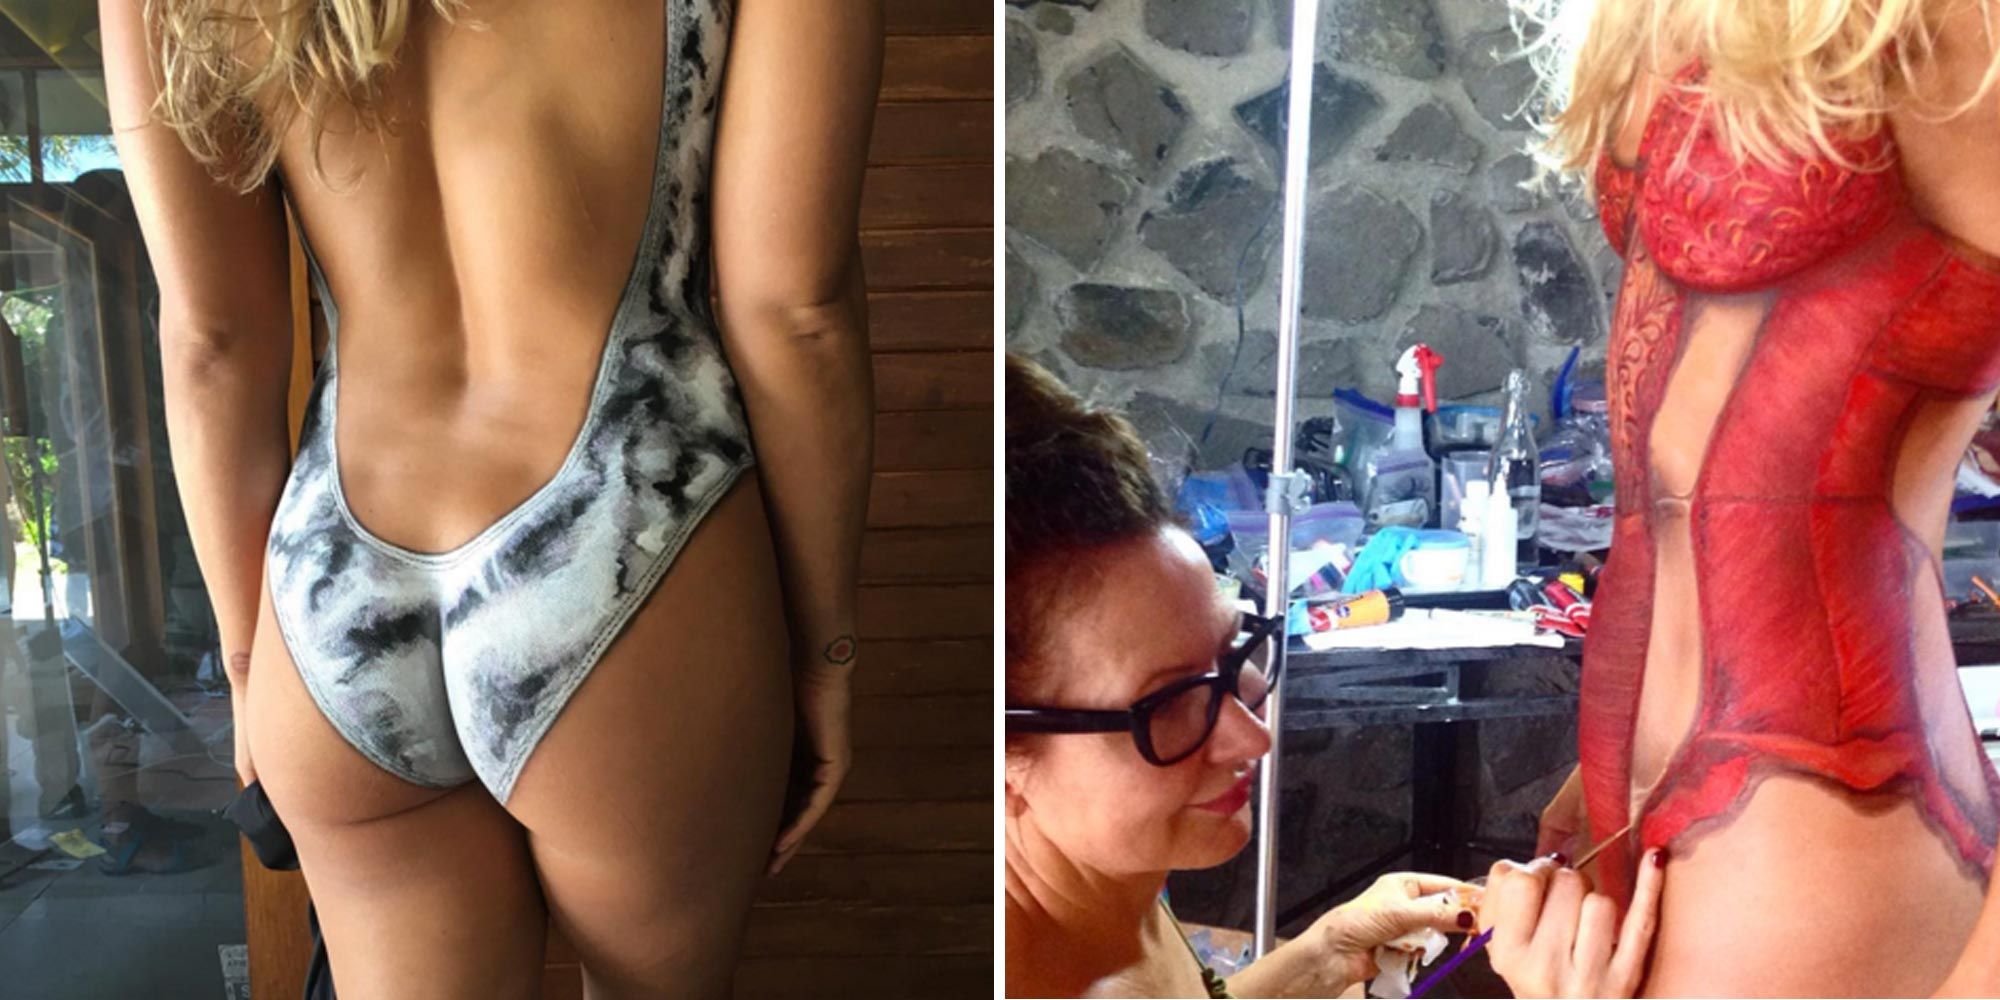 amanda jenigen recommends Body Painting Nude Women